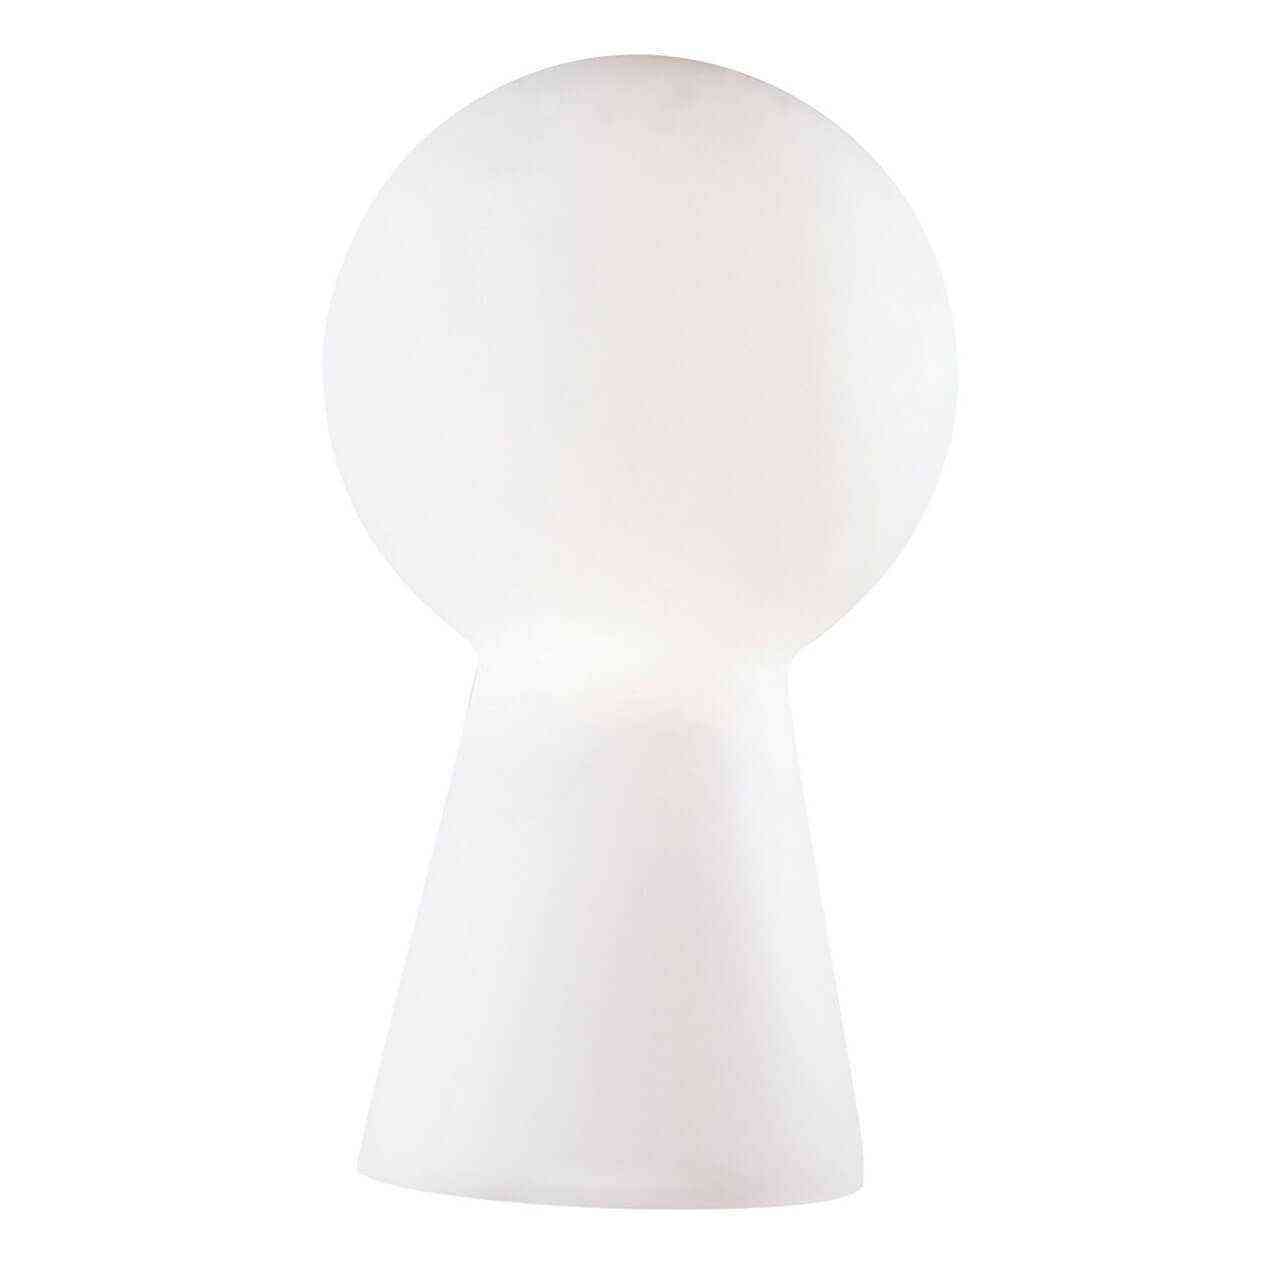 Настольная лампа Ideal Lux Bi rillo TL1 Medium Bianco 000251 белая, для спальни